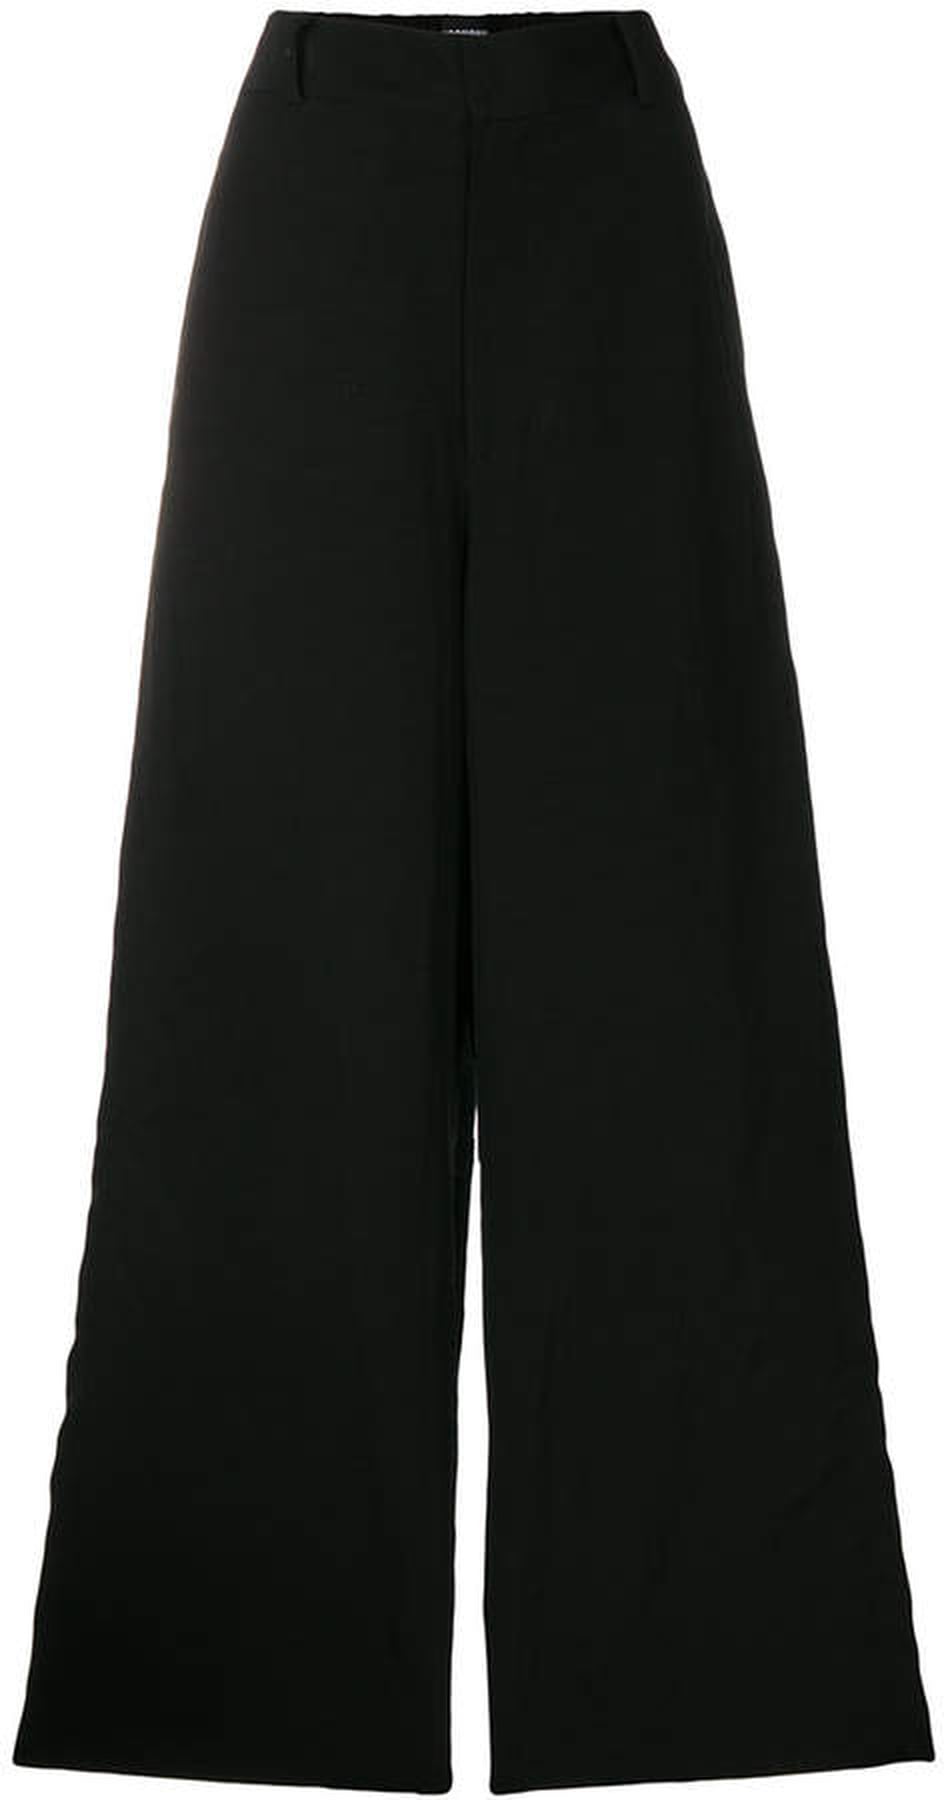 Mary-Kate Olsen Wearing Black Pants | POPSUGAR Fashion